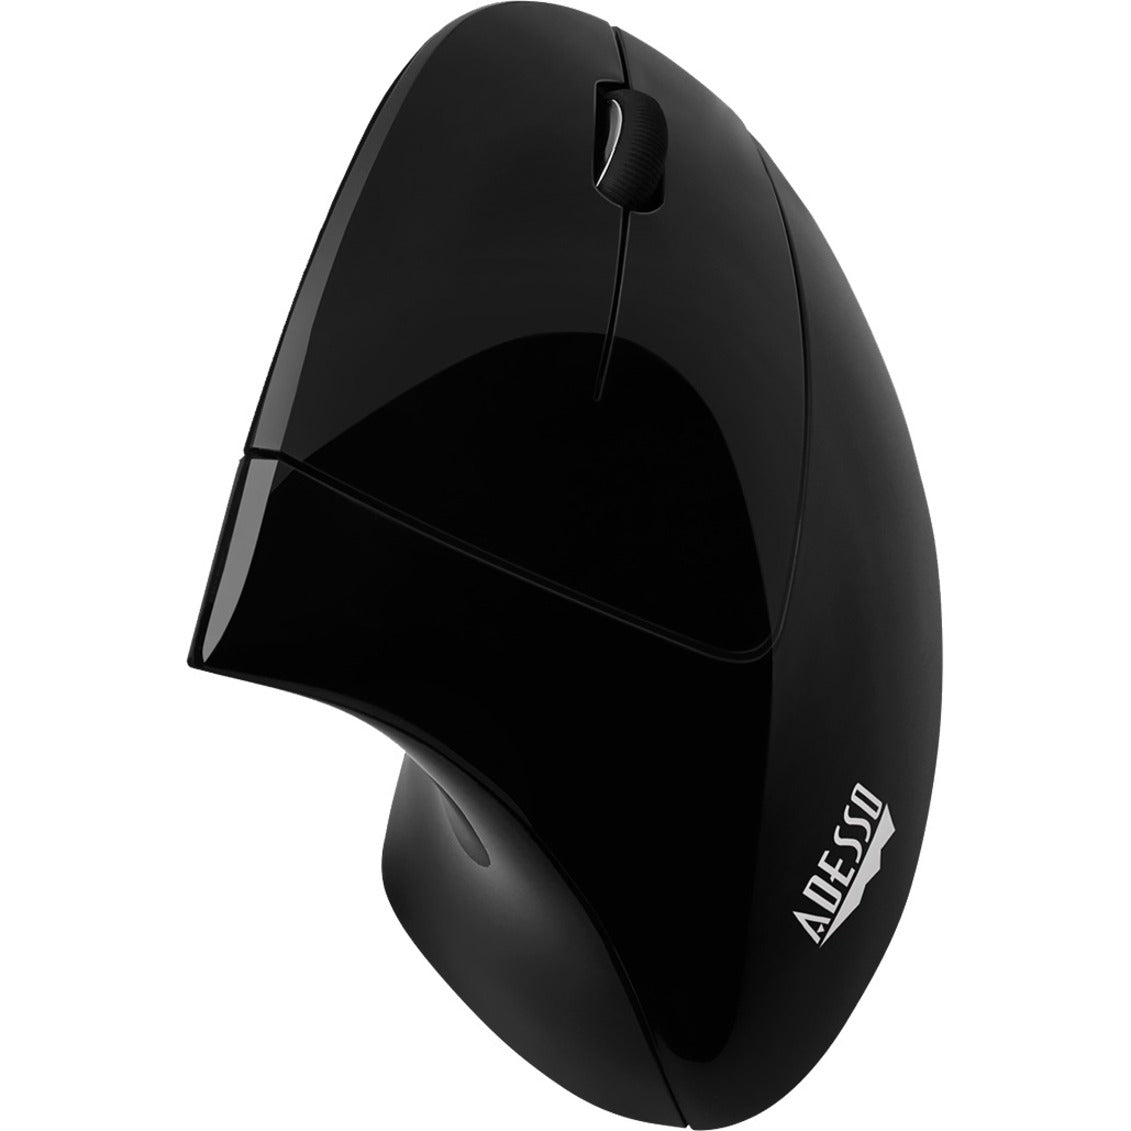 Adesso iMouse E10 2.4 GHz RF Wireless Vertical Ergonomic Mouse, Battery Indicator, Ergonomic Design